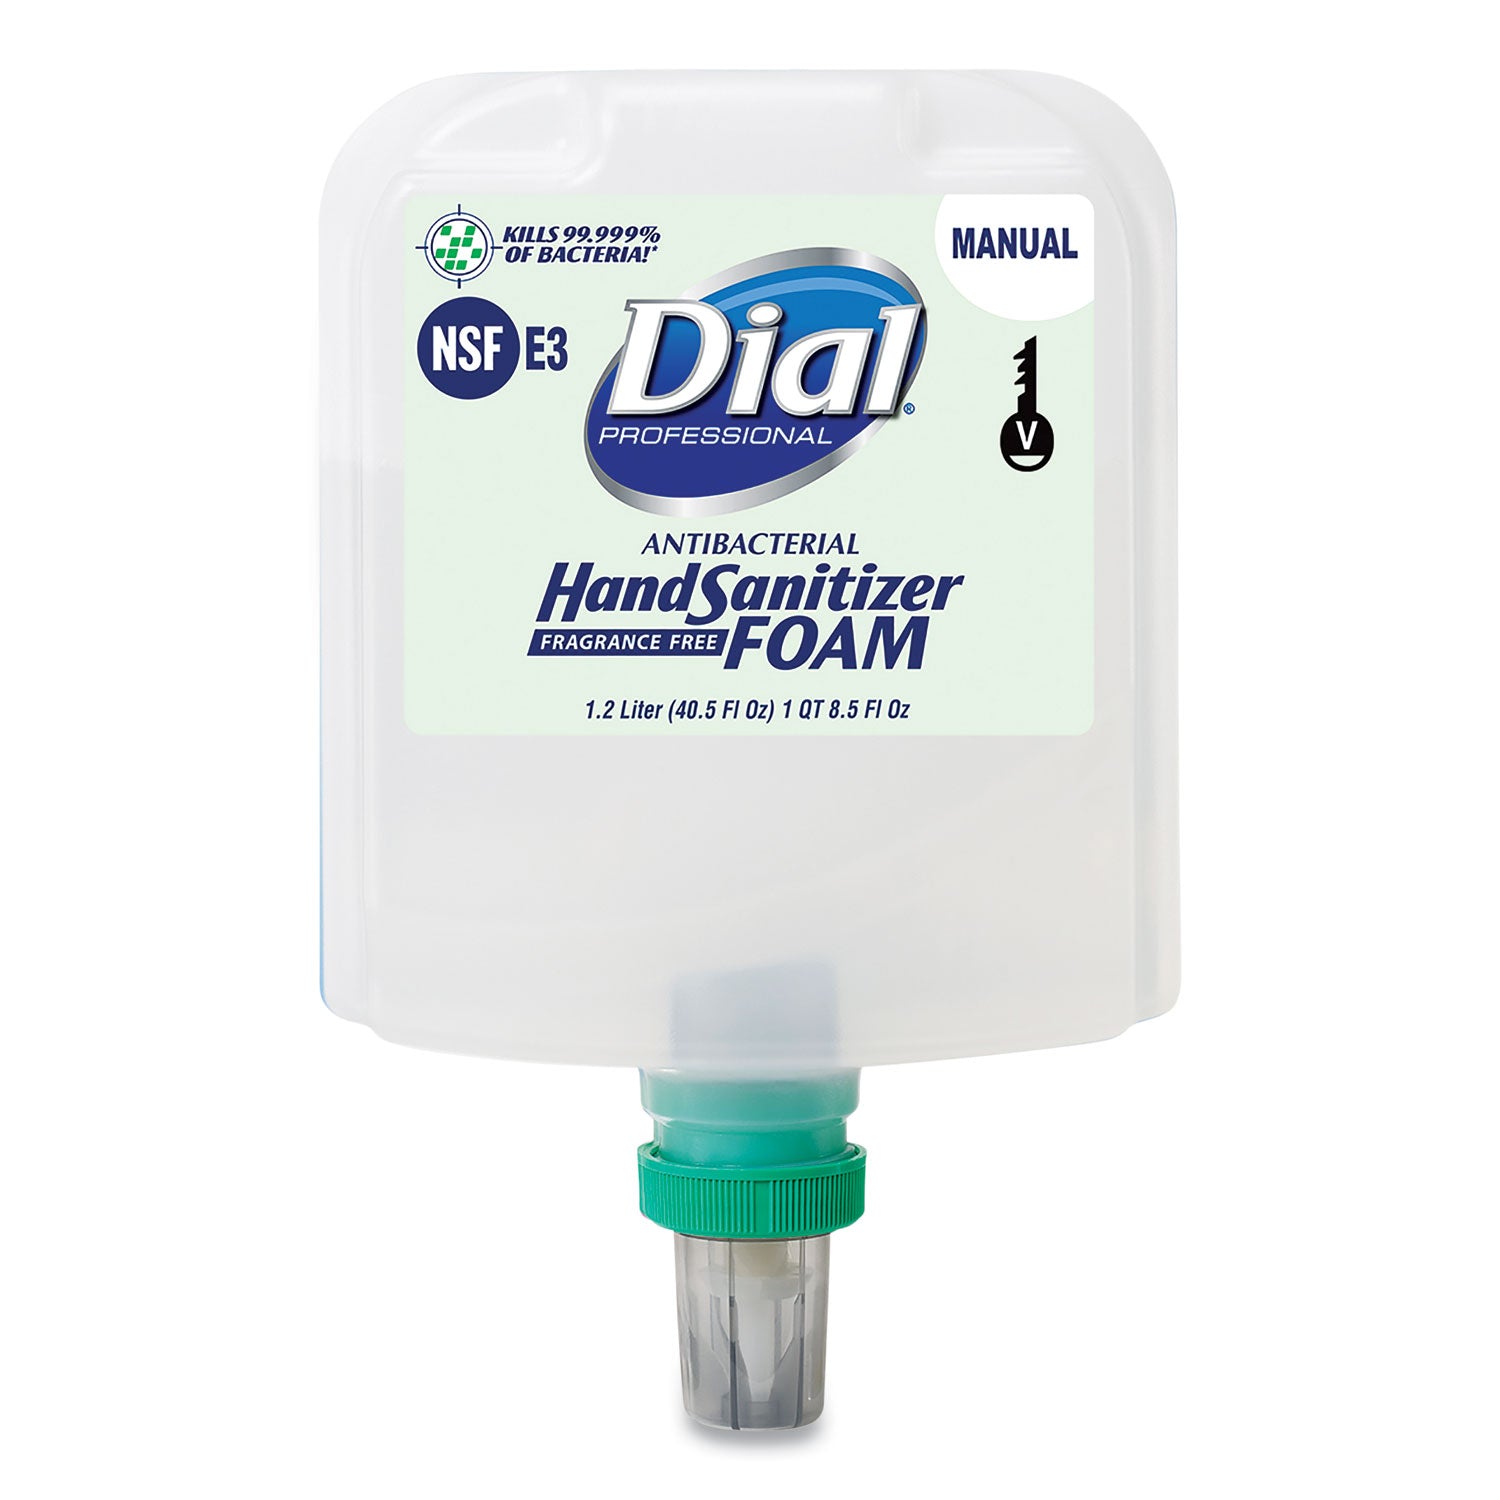 antibacterial-foaming-hand-sanitizer-refill-for-dial-1700-v-dispenser-fragrance-free-12-l-3-carton_dia19717ct - 1